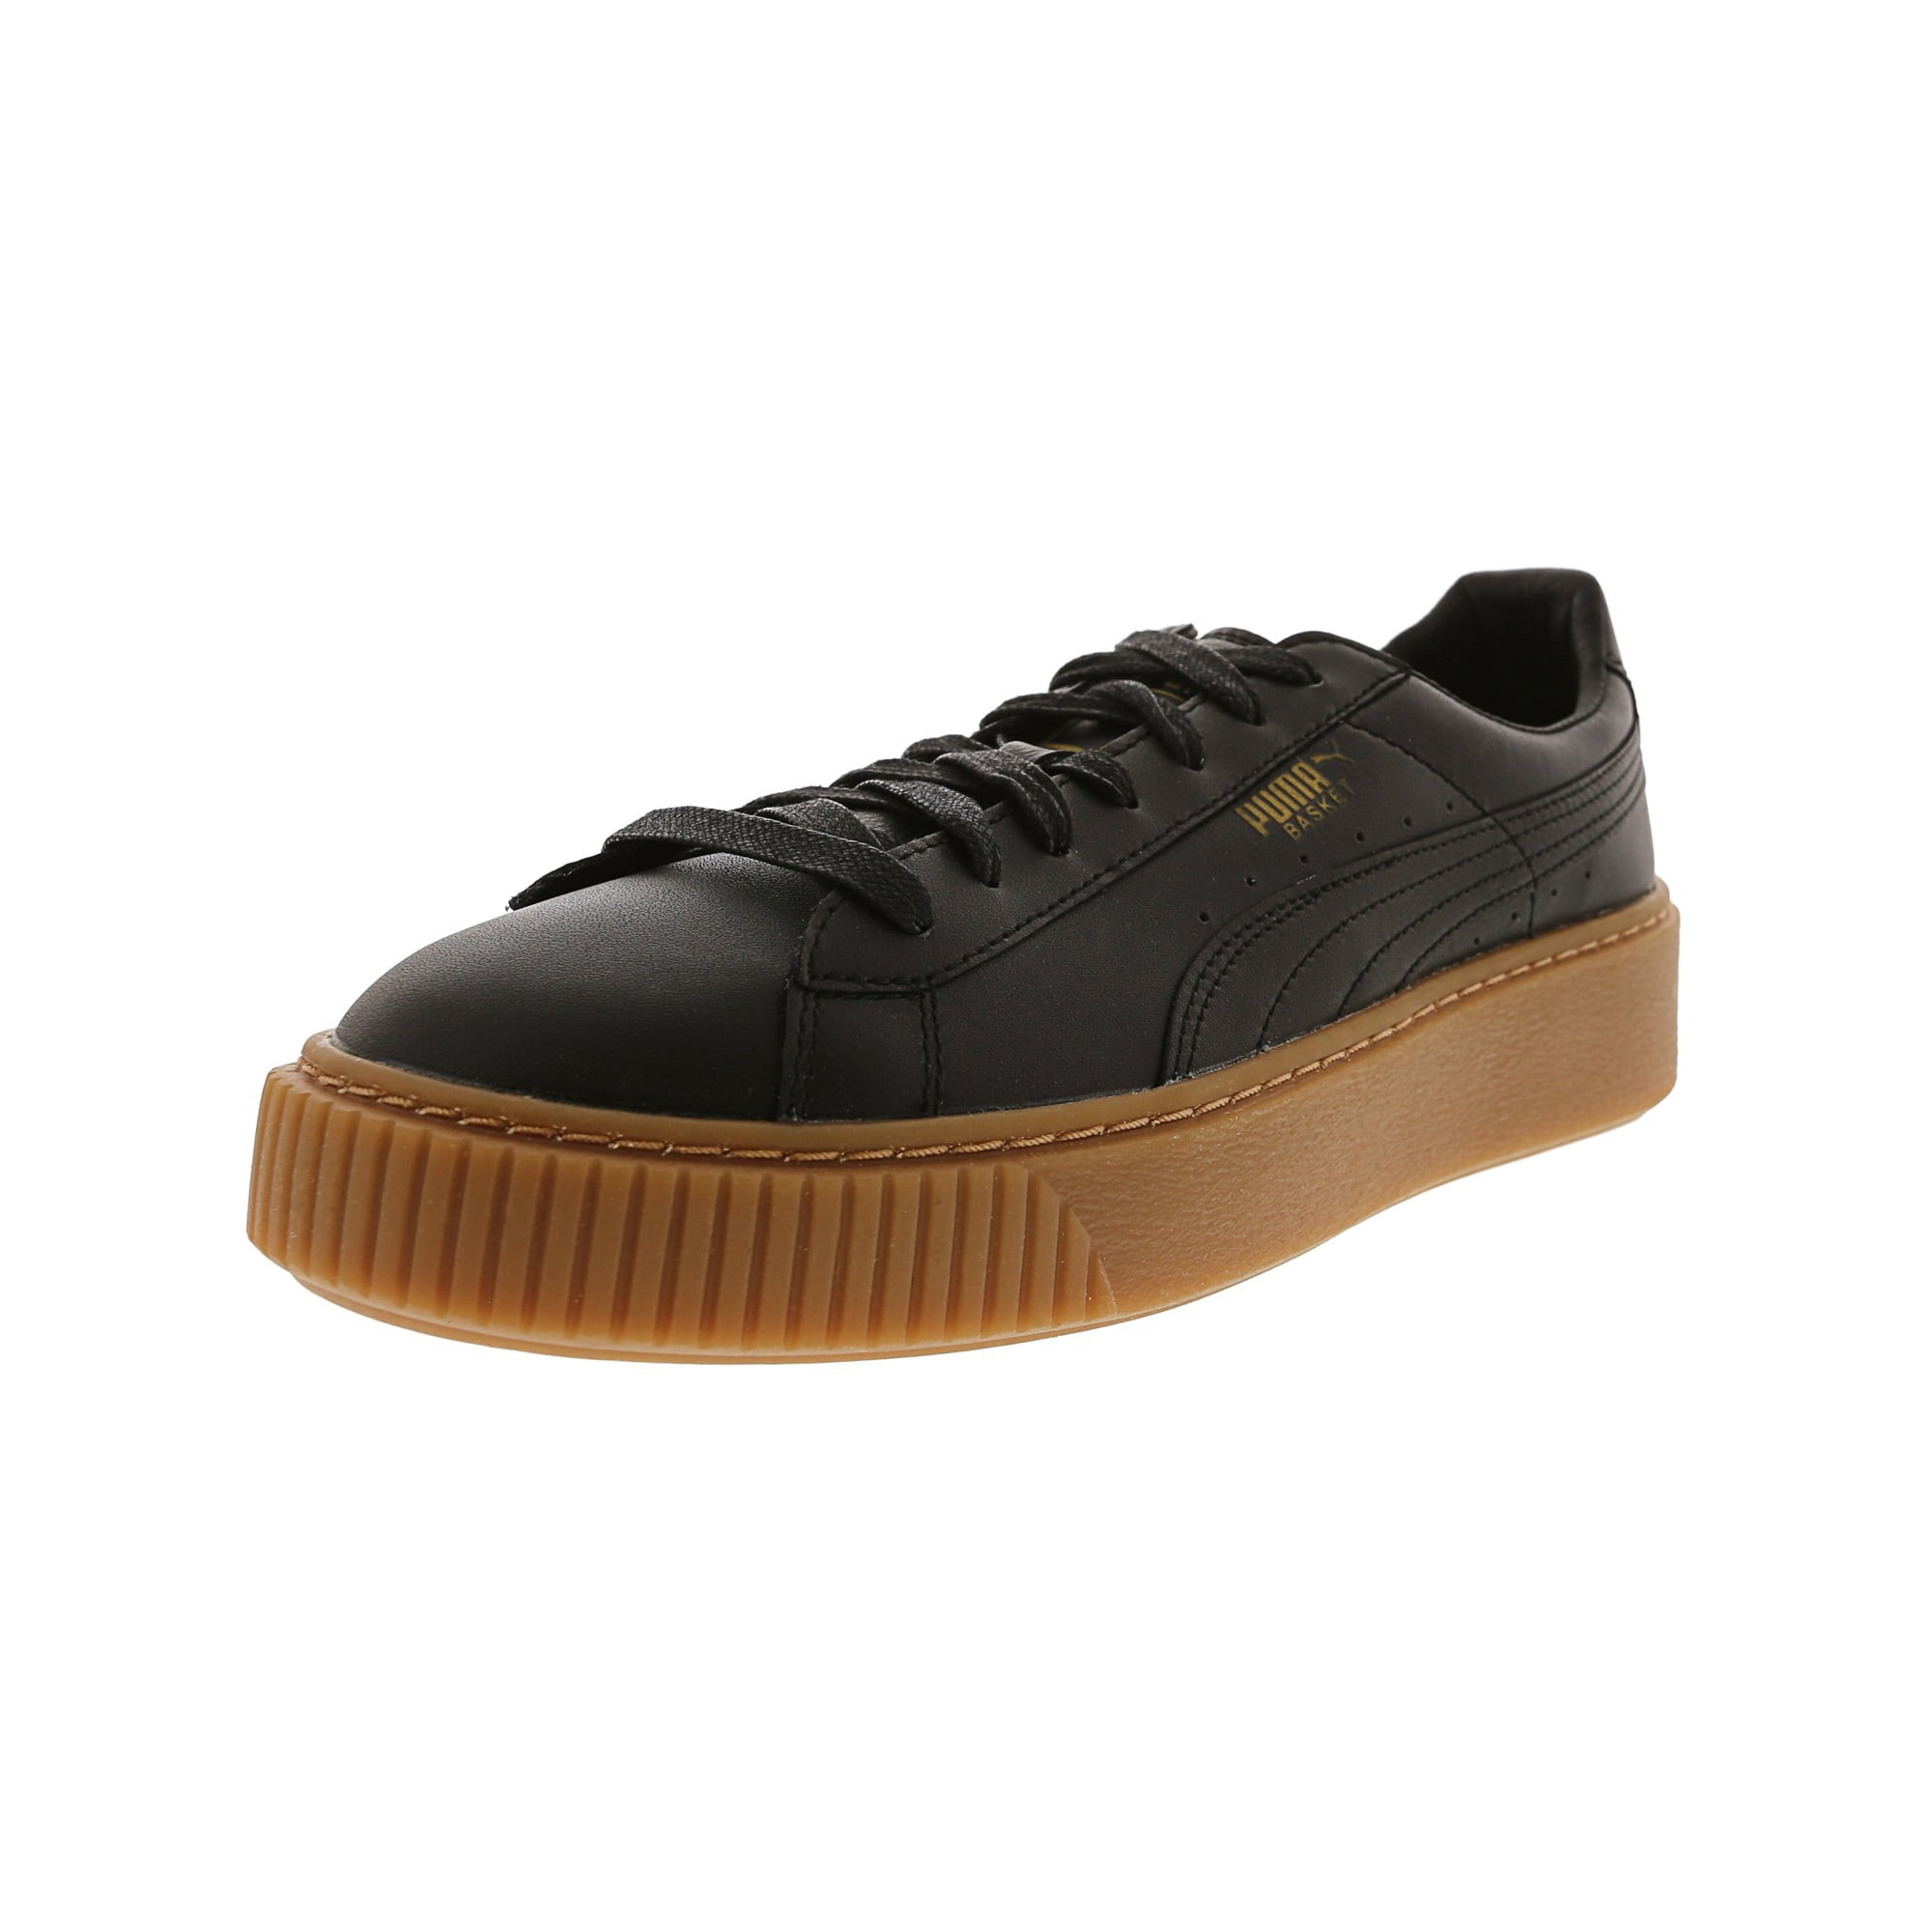 Puma Women's Basket Platform Core Black / Ankle-High Leather Fashion Sneaker - 9M Walmart Canada